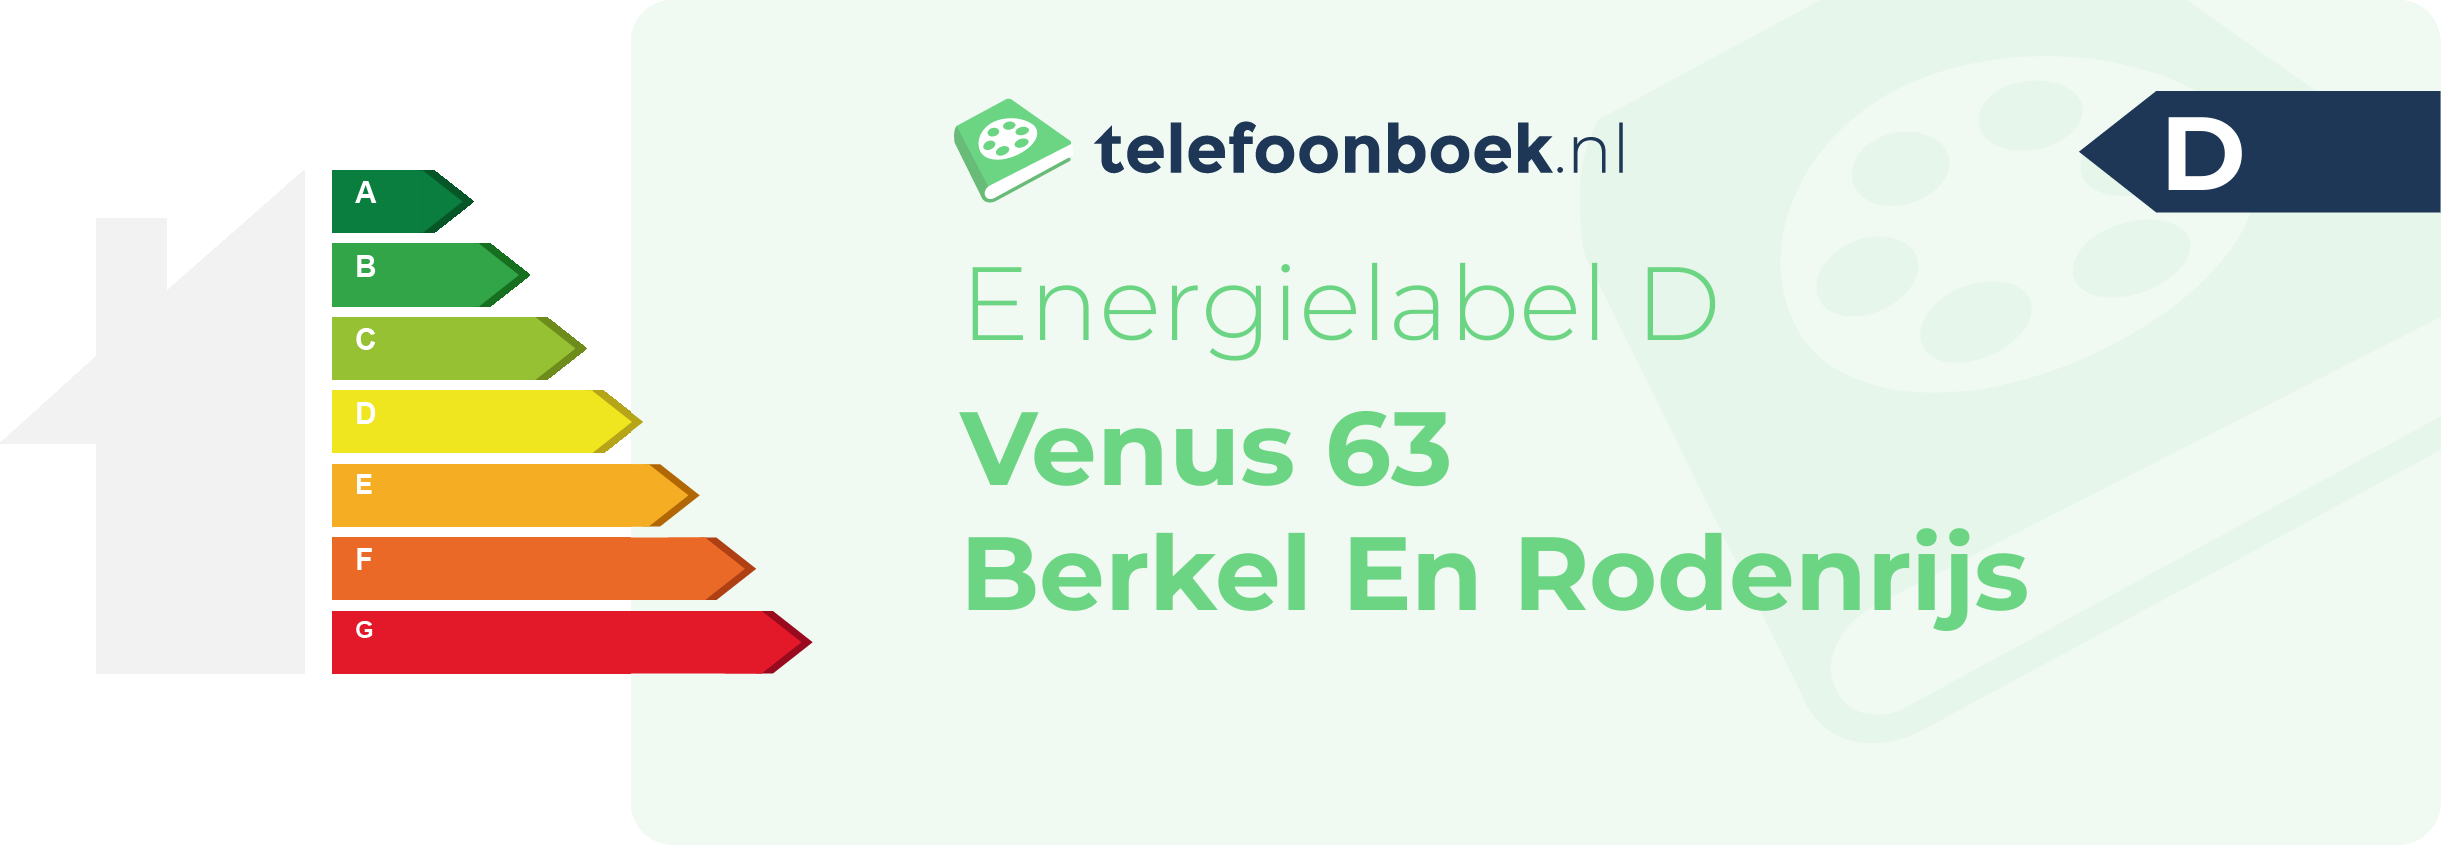 Energielabel Venus 63 Berkel En Rodenrijs